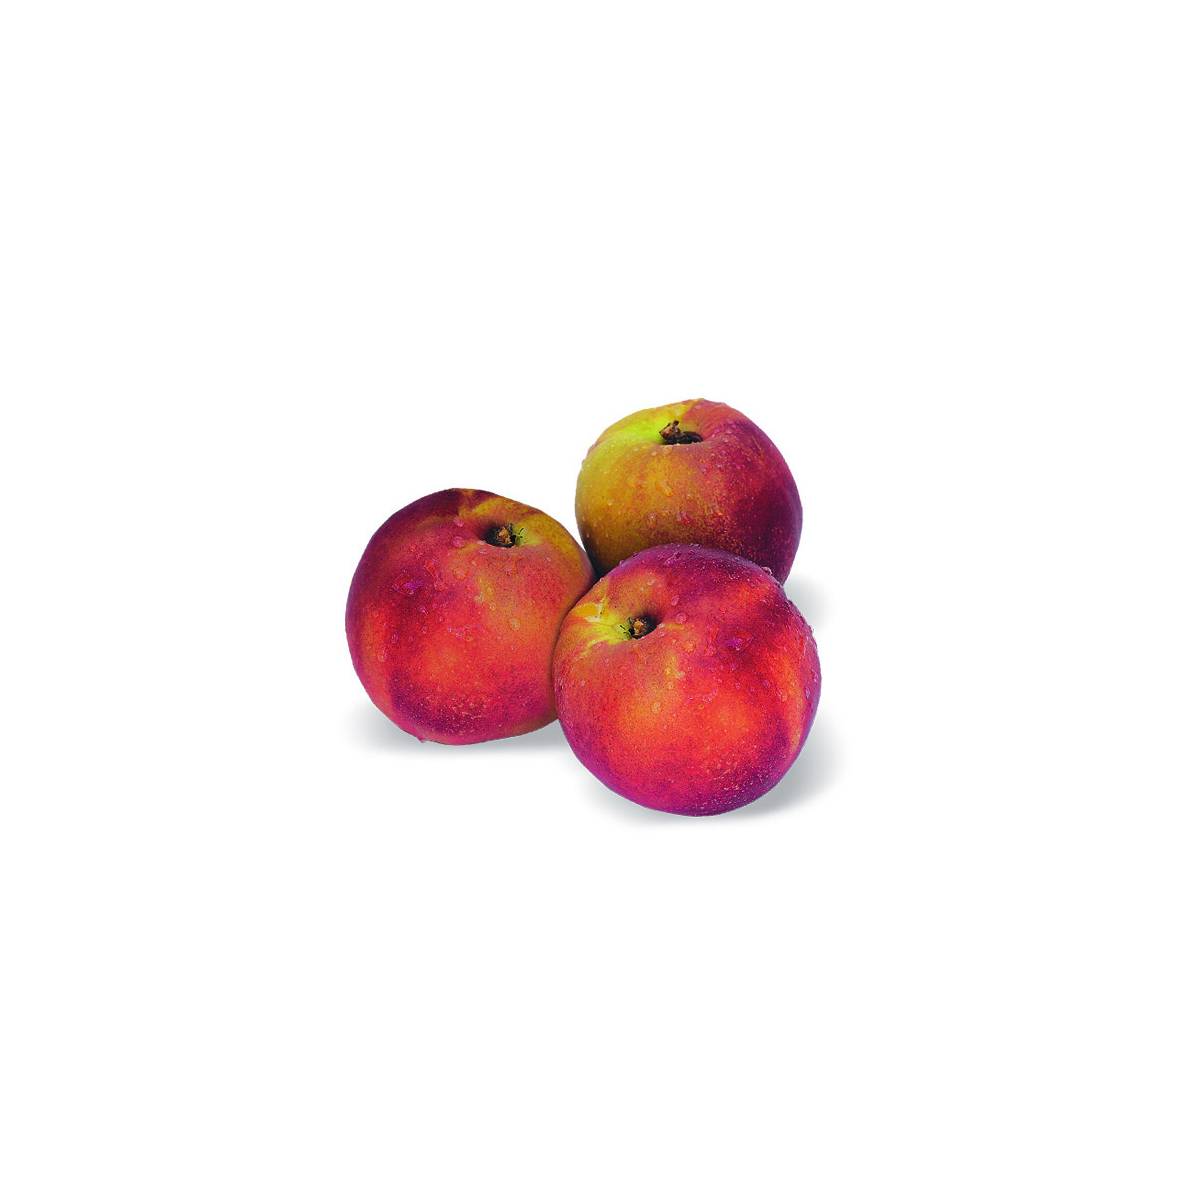 Nectarinier nain nectarinette - nains de jardins®/prunus persica nectarinette - nains de jardins®[-]pot de 5l